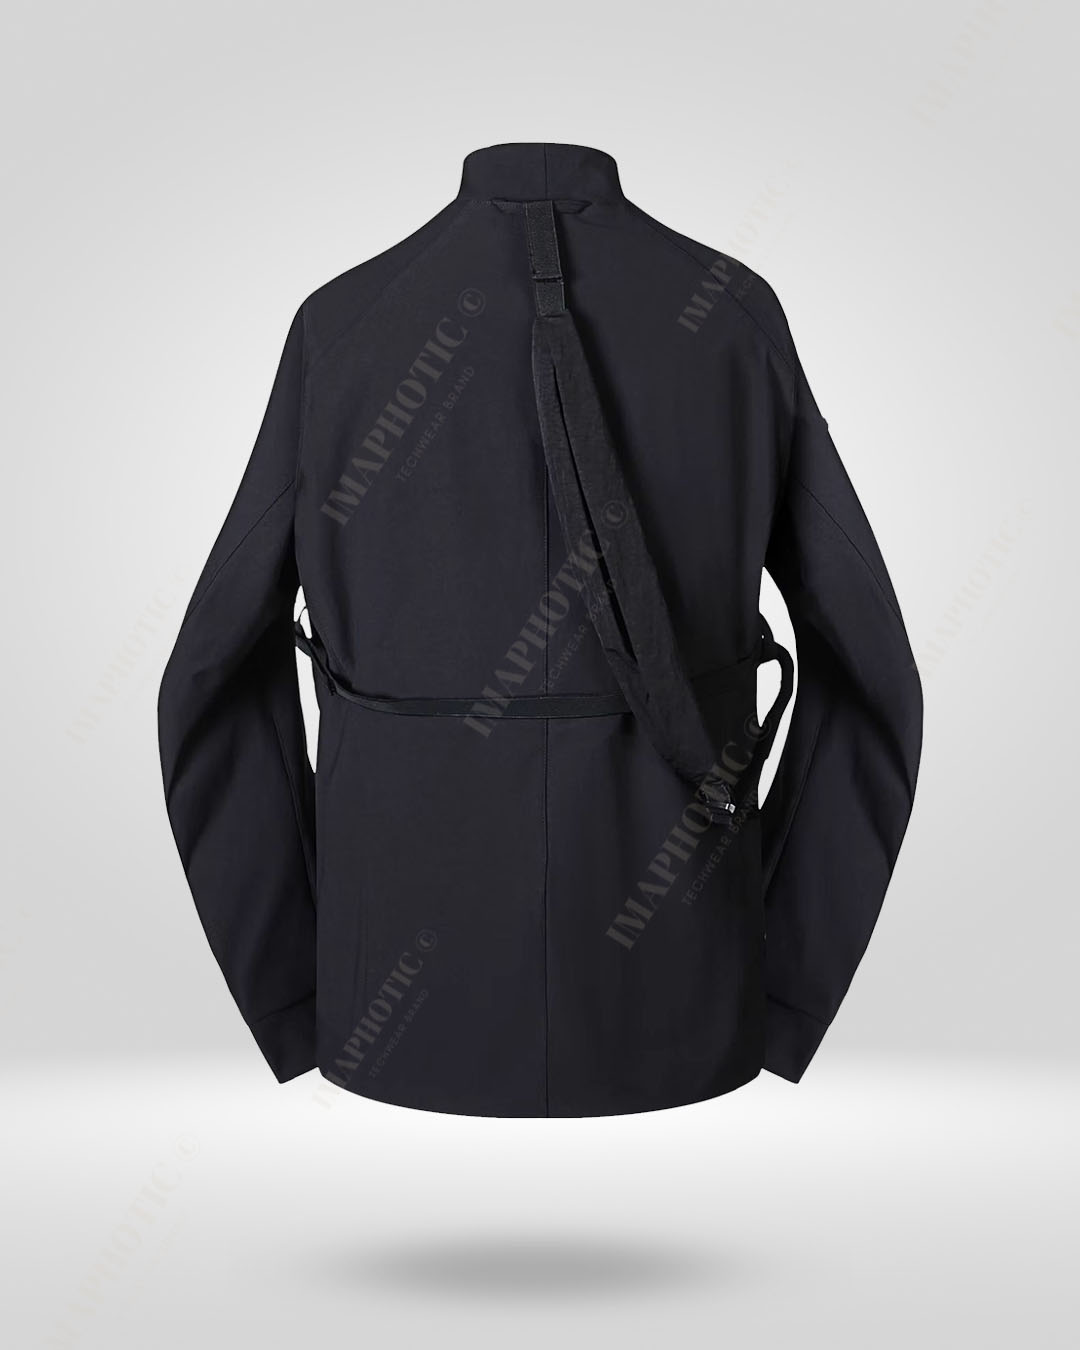 Chic Tailored Black Cardigan Jacket